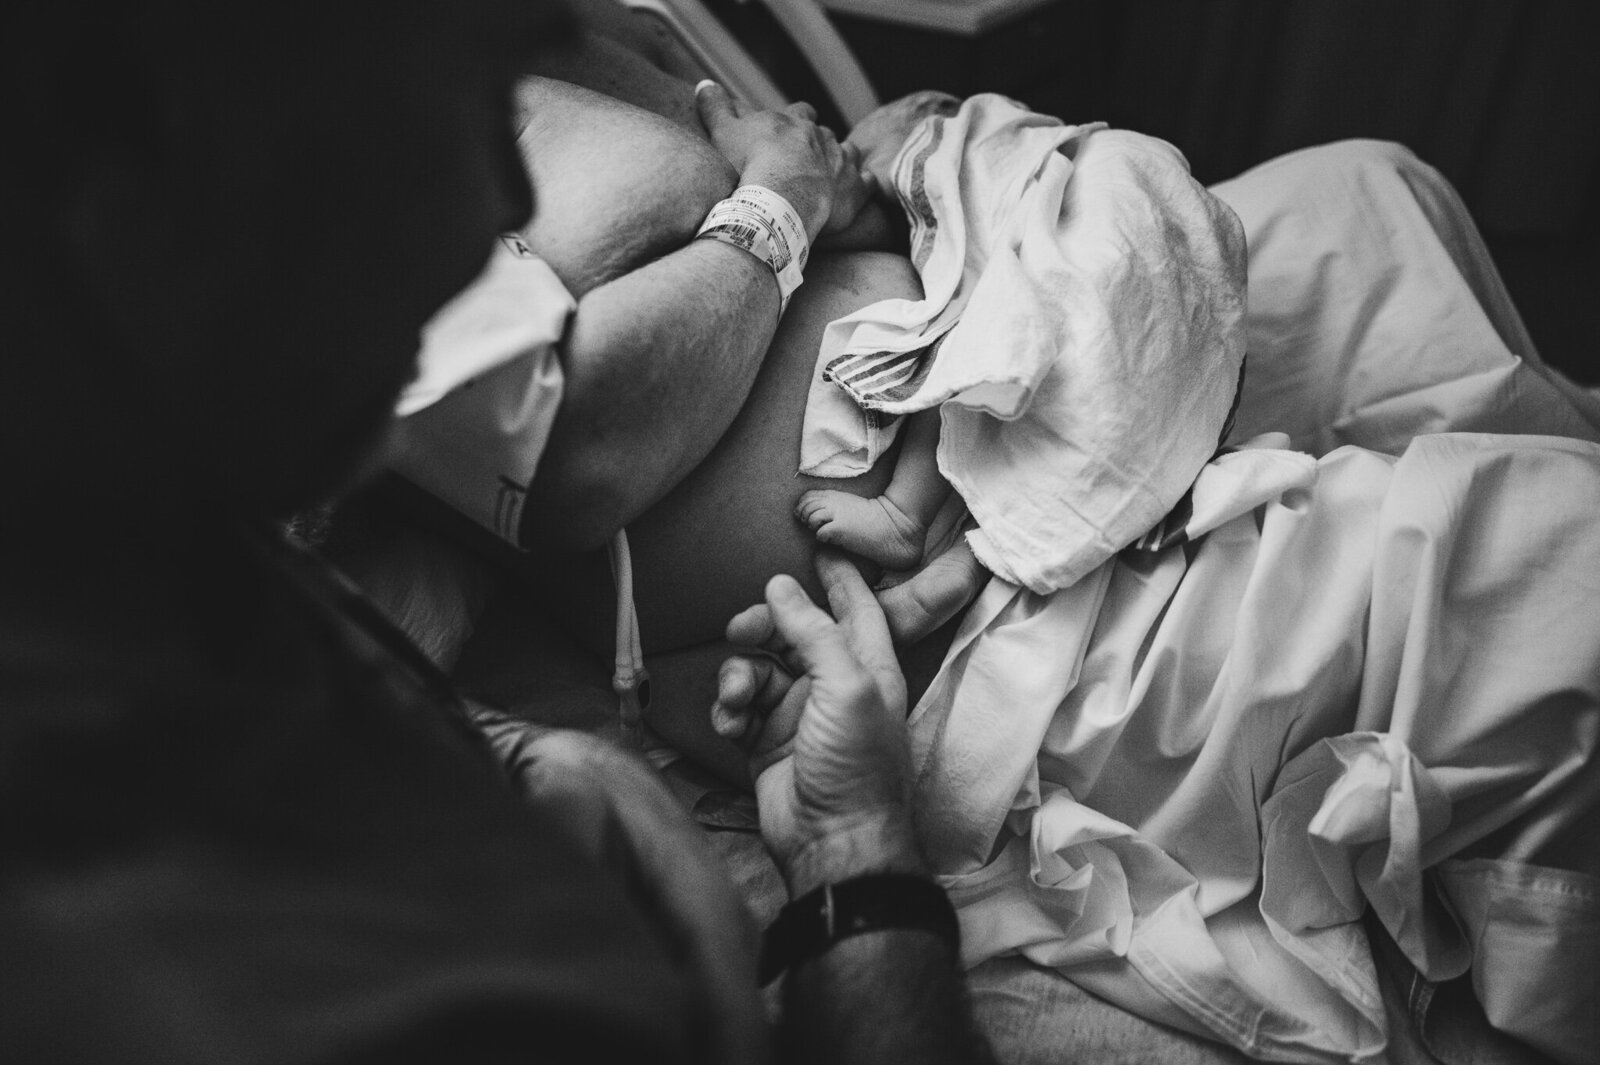 Newborn breastfeeding in hospital